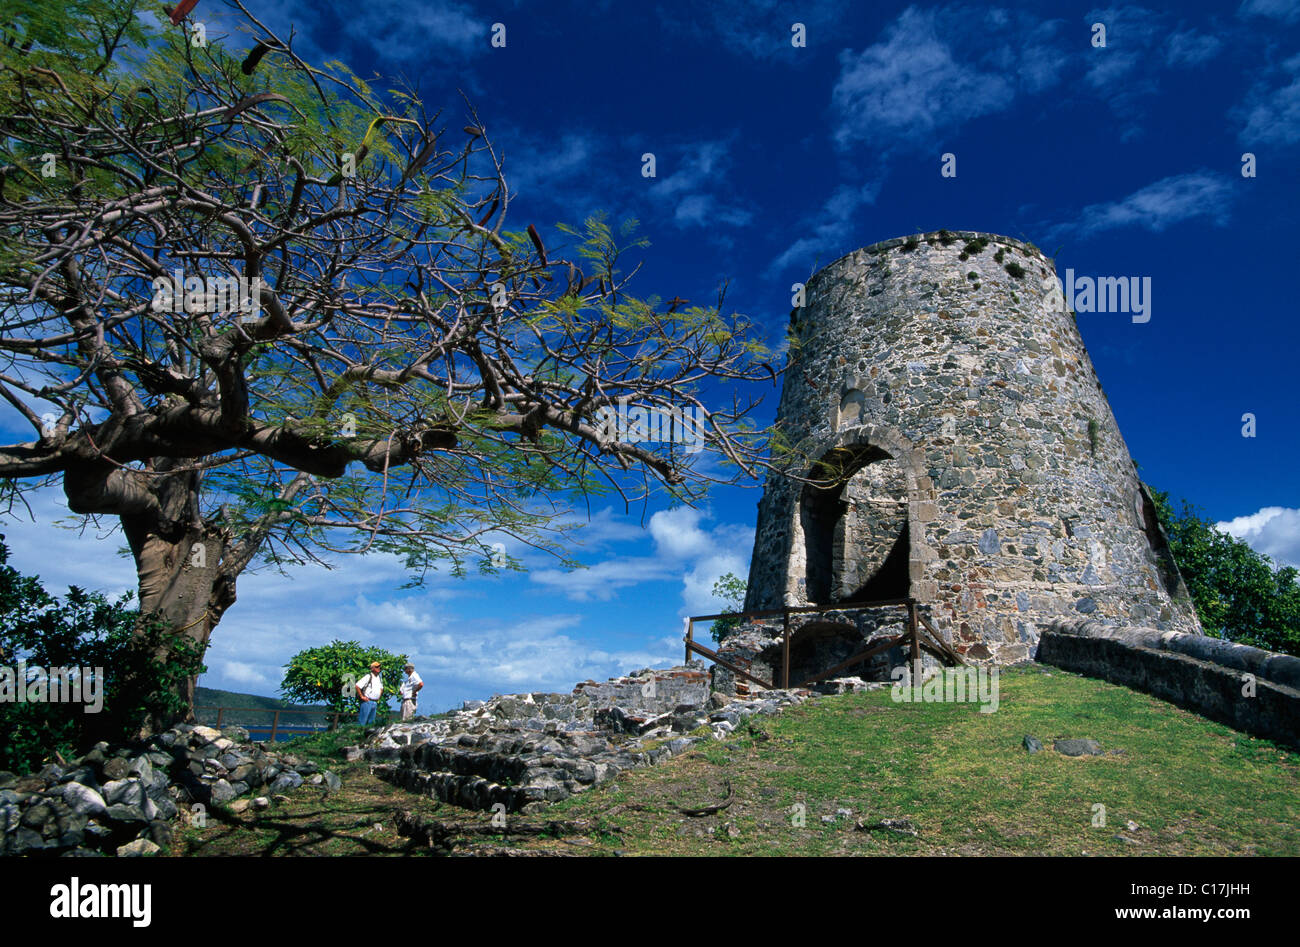 Ruines du Moulin à Sucre d'Annaberg, St. John Island, United States Virgin Islands, Caribbean Banque D'Images